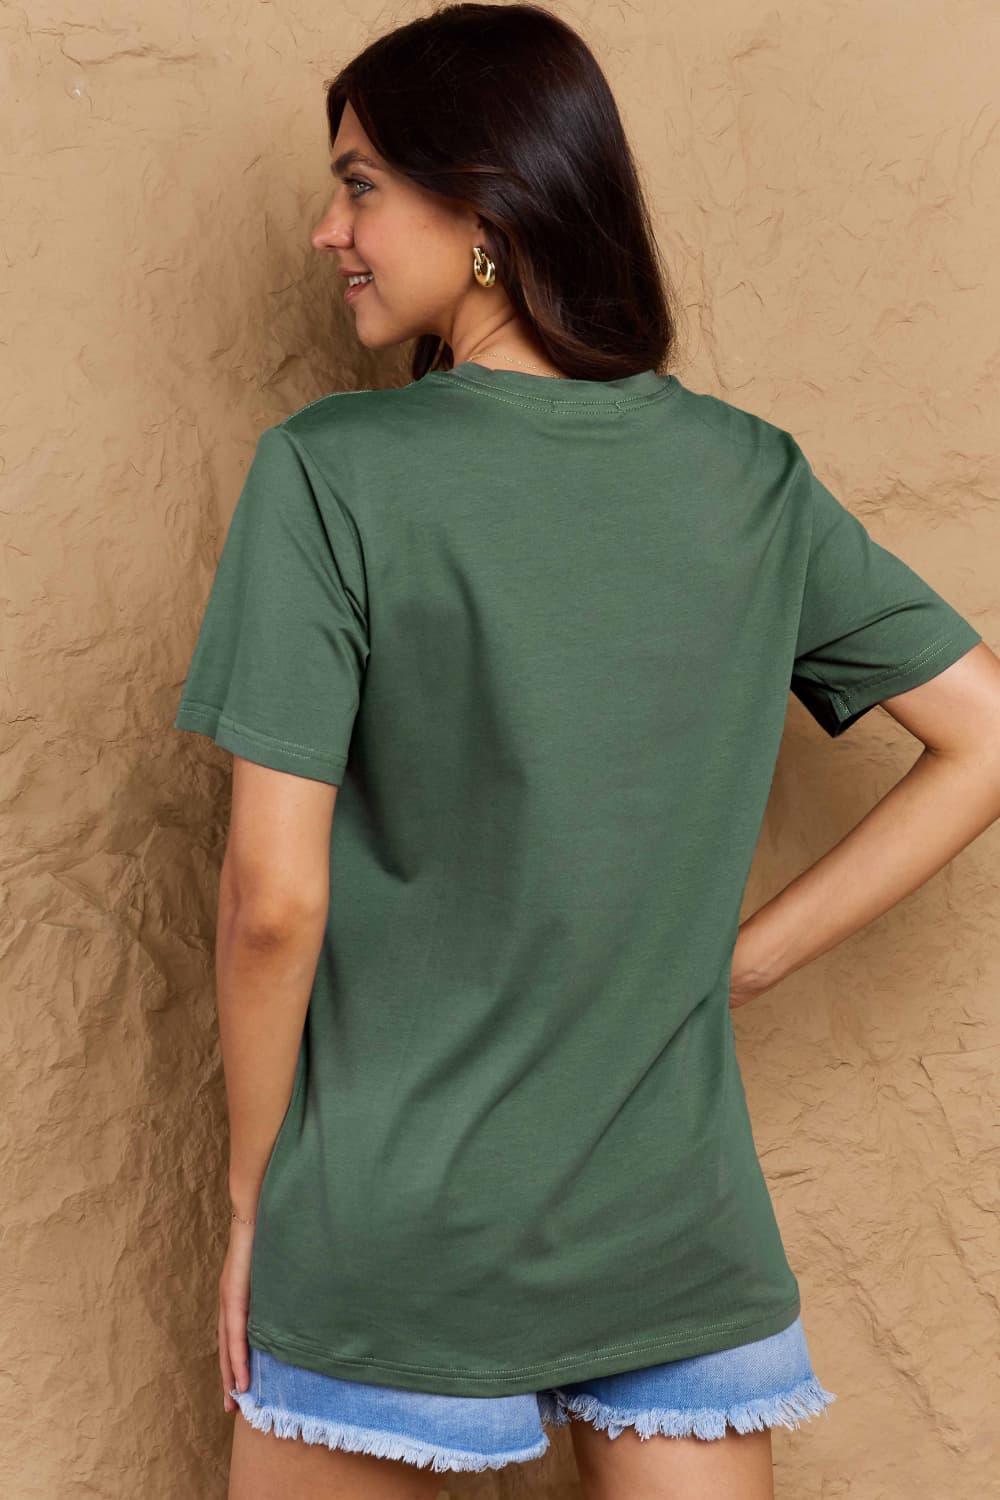 Simply Love Full Size Graphic BOO Cotton T-Shirt - Vesteeto